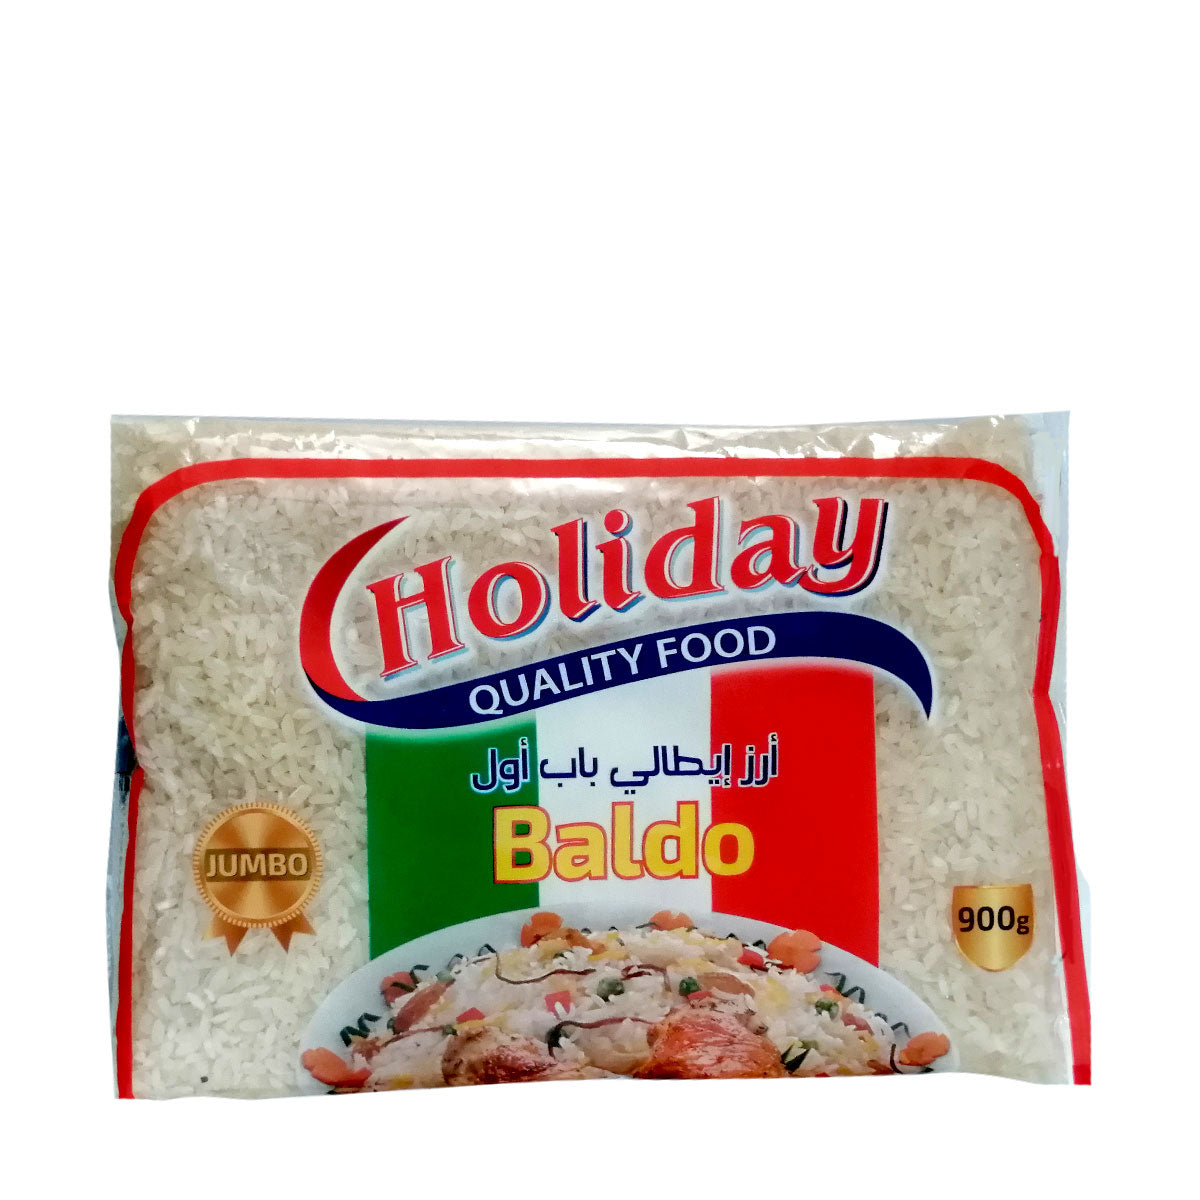 Holiday Quality Food 900 g أرز ايطالي باب أول